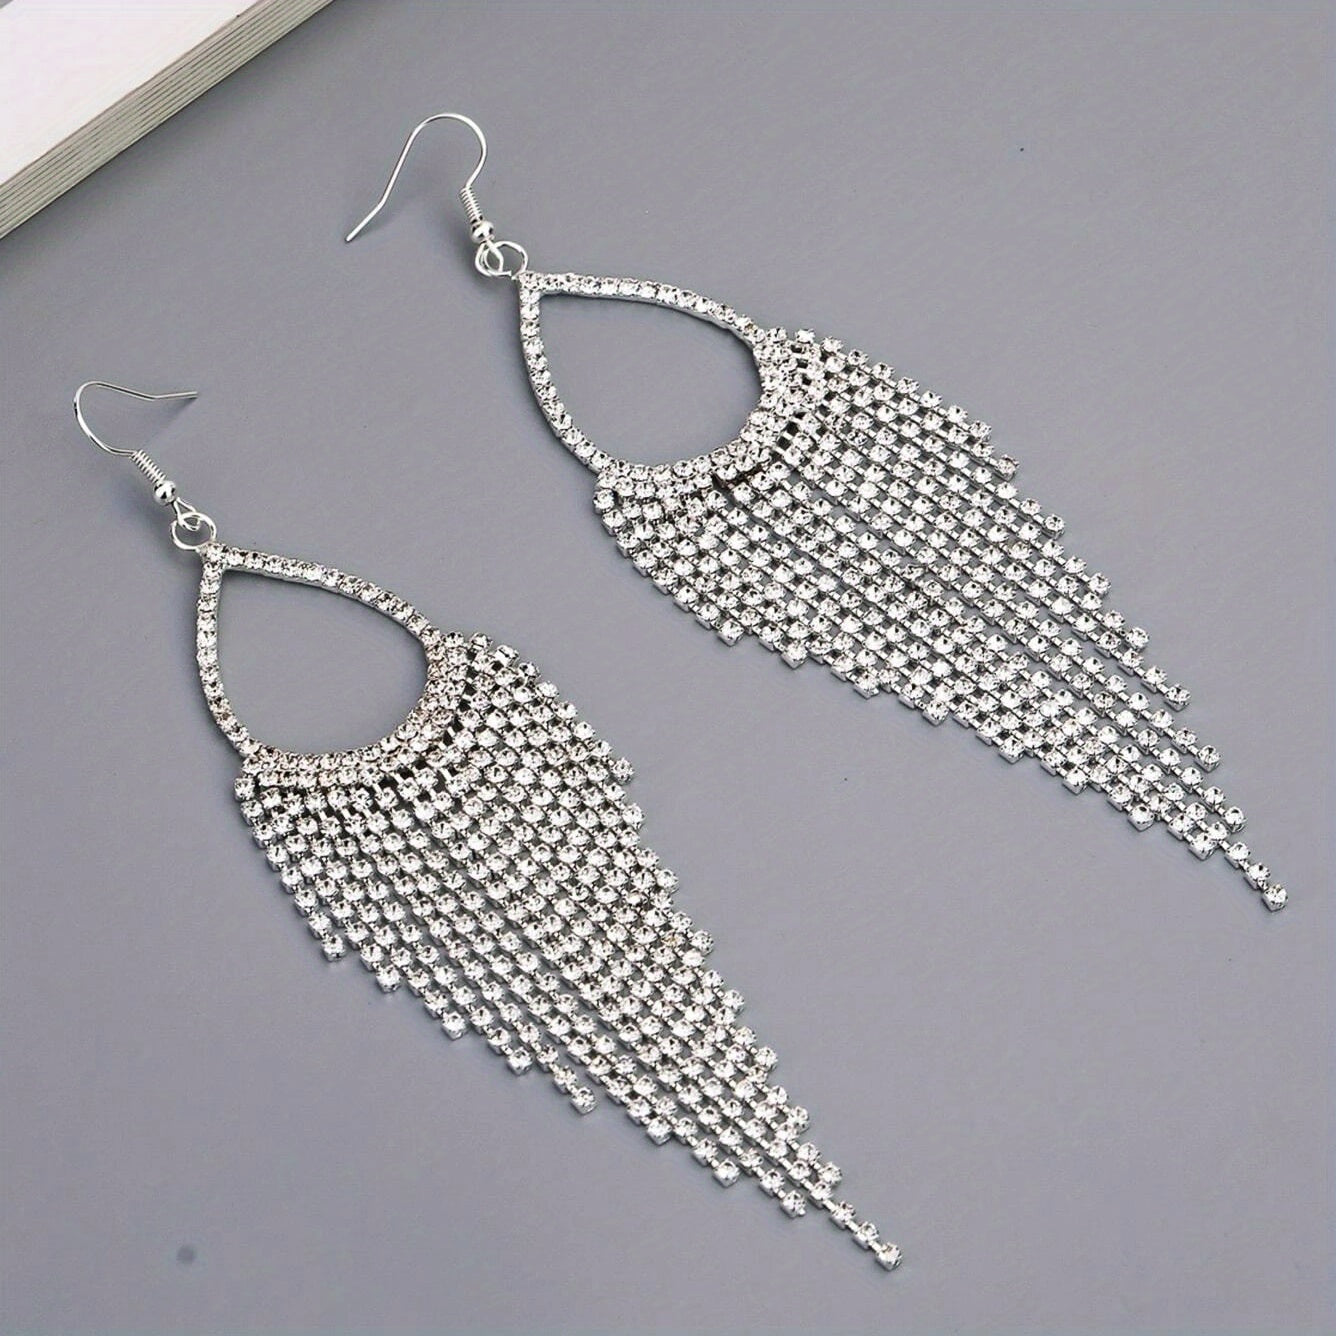 Gorgeous Rhinestone Tassel Dangle Earrings - Boho Elegant Style Zinc Alloy Silver Plated Jewelry for Weddings